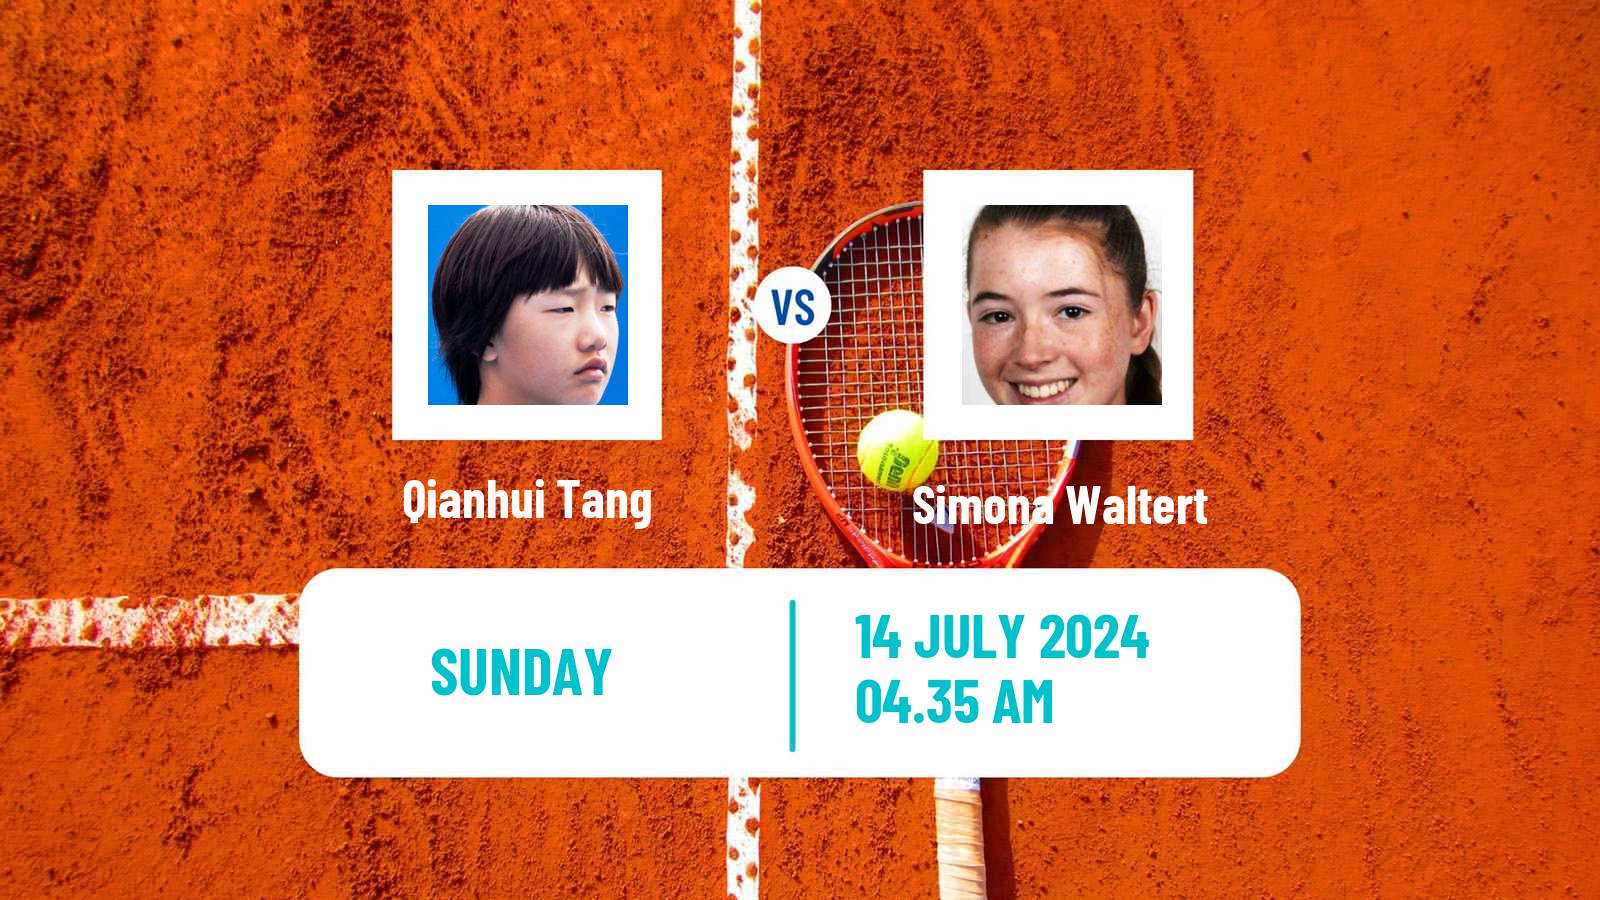 Tennis WTA Budapest Qianhui Tang - Simona Waltert